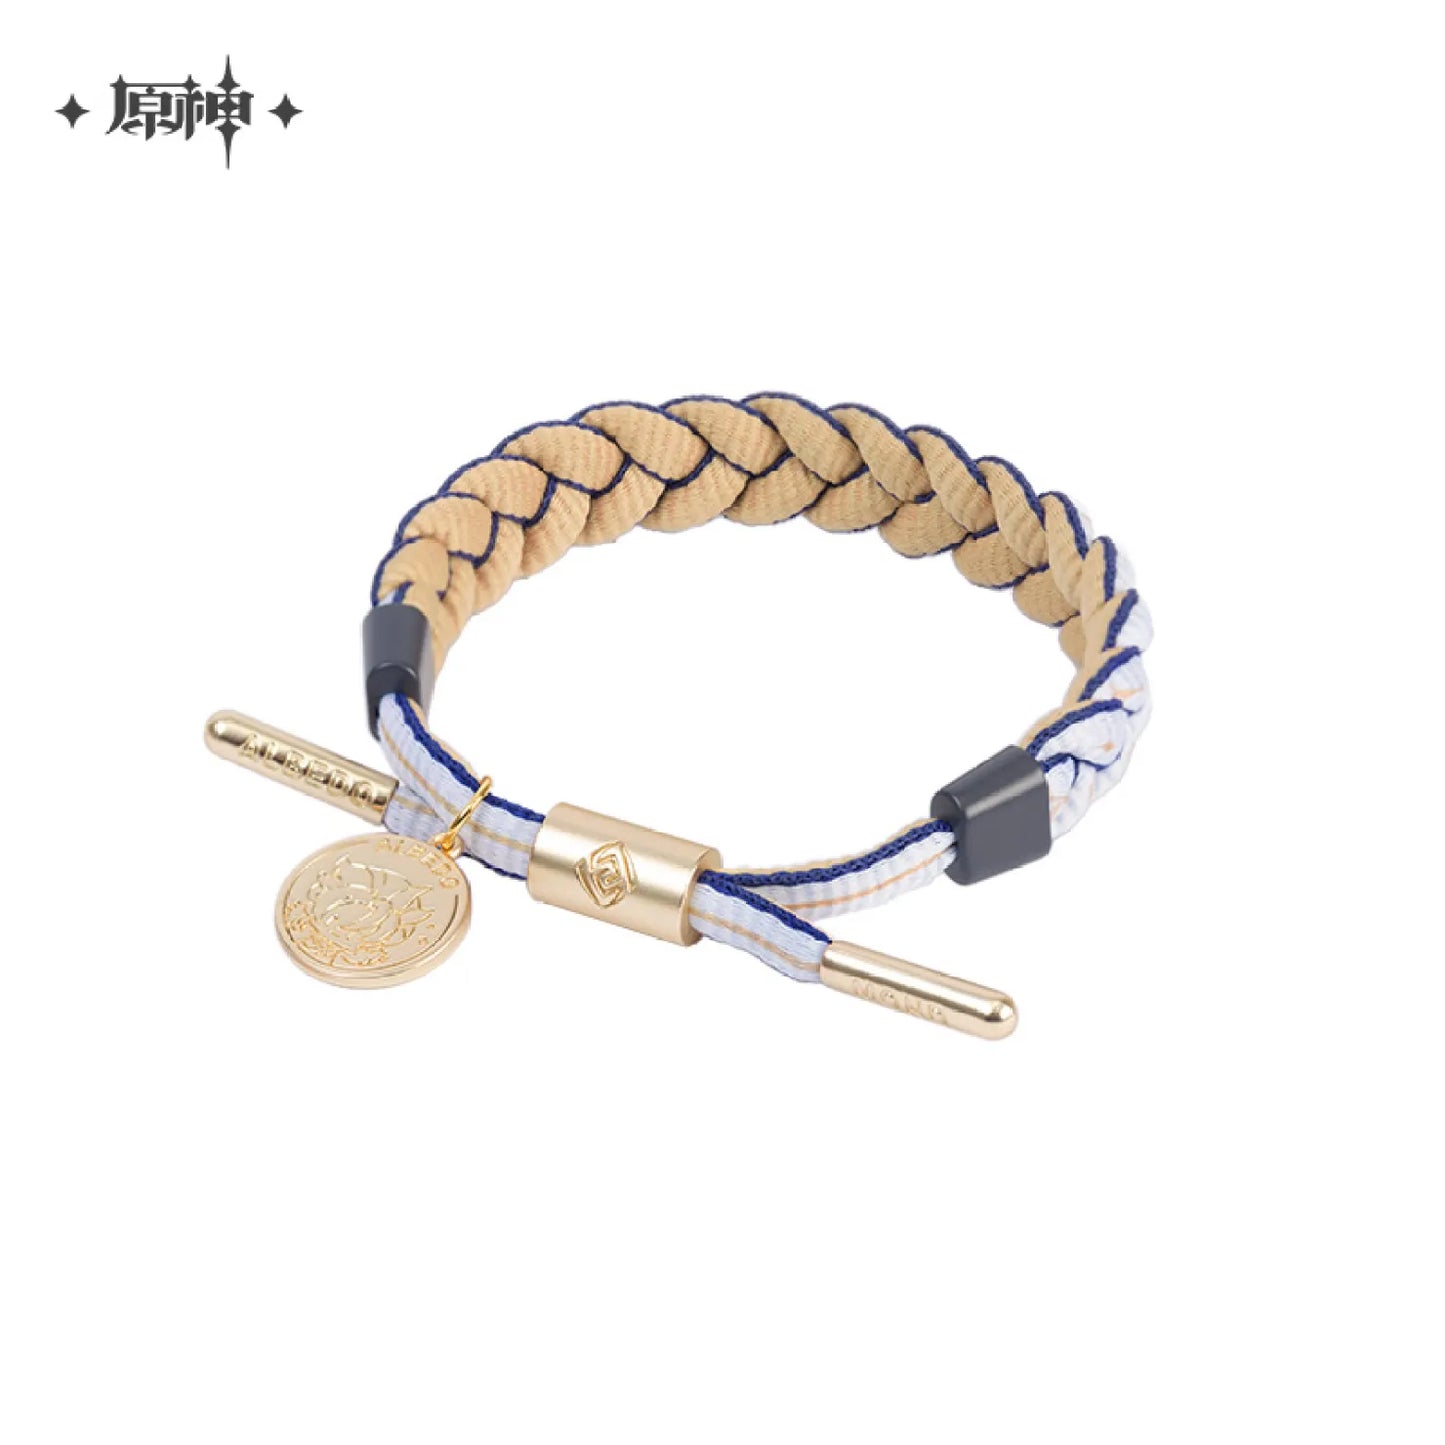 Genshin Impact Character Impression Woven Rope Bracelet